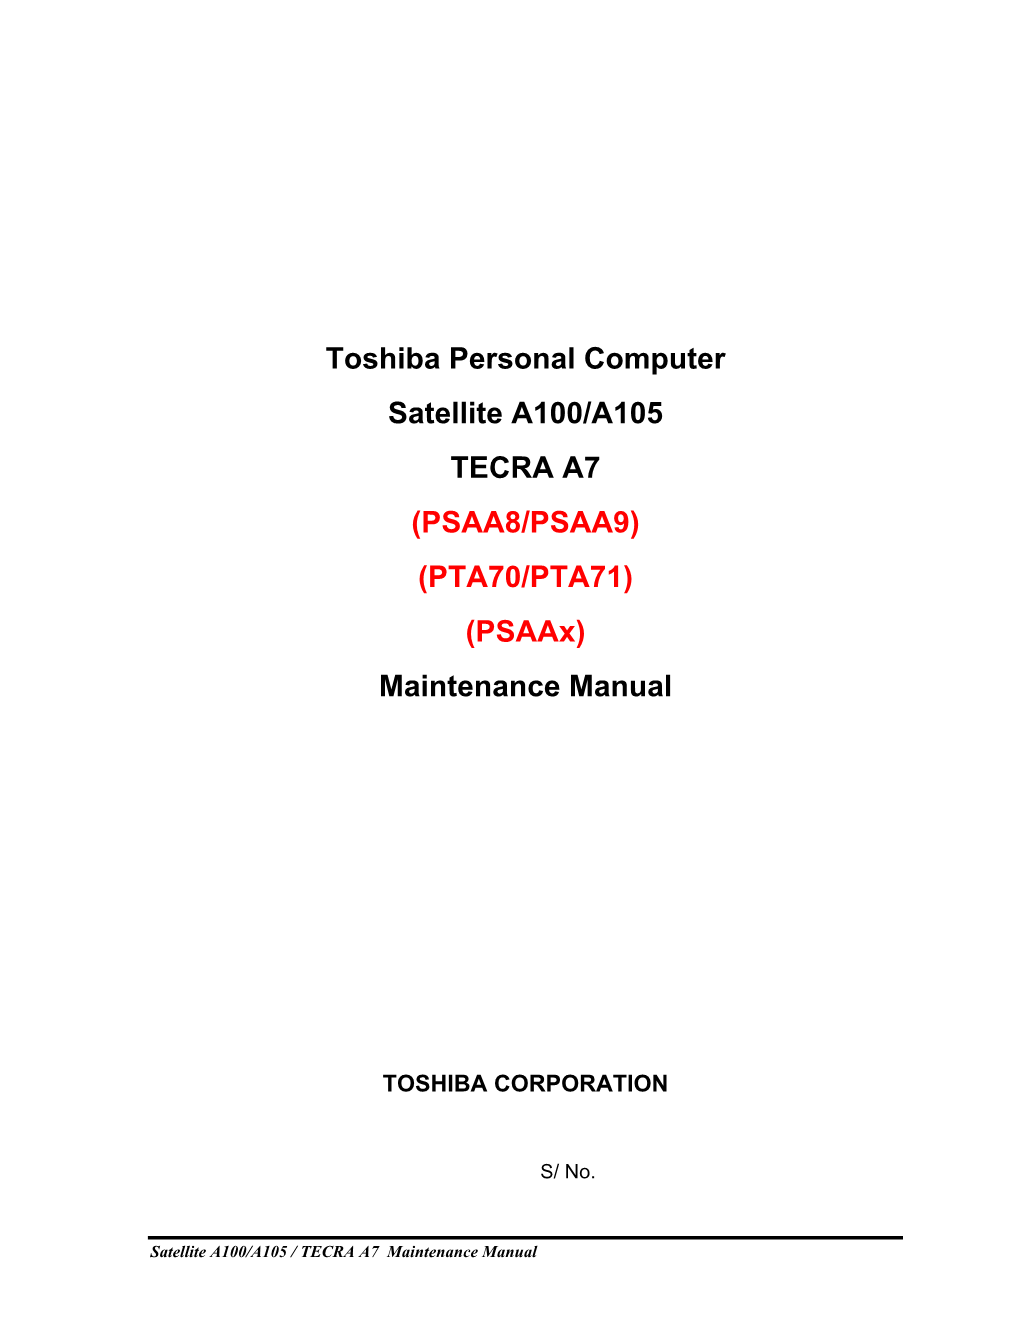 Toshiba Personal Computer Satellite A100/A105 TECRA A7 (PSAA8/PSAA9) (PTA70/PTA71) (Psaax) Maintenance Manual